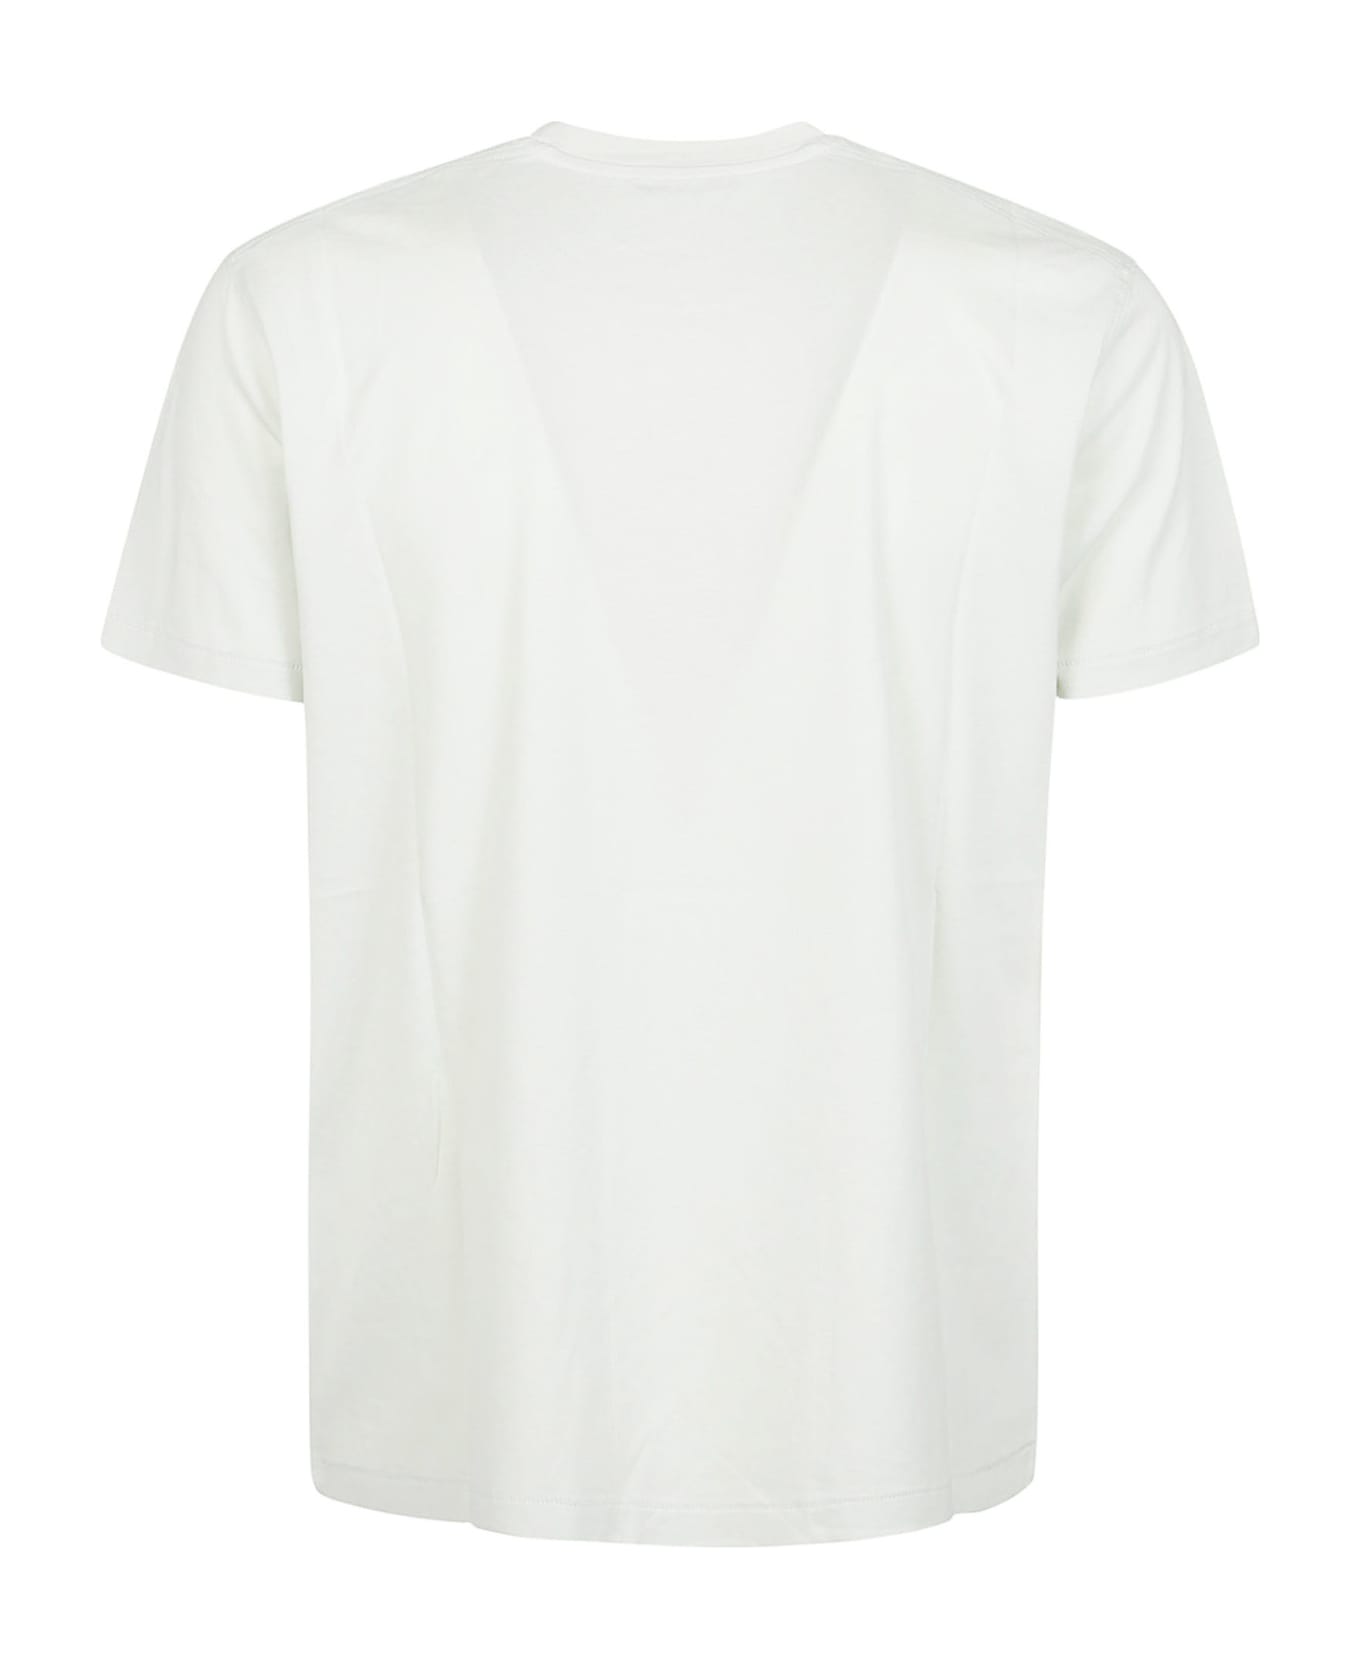 Tom Ford T-shirt - Pale Mint シャツ